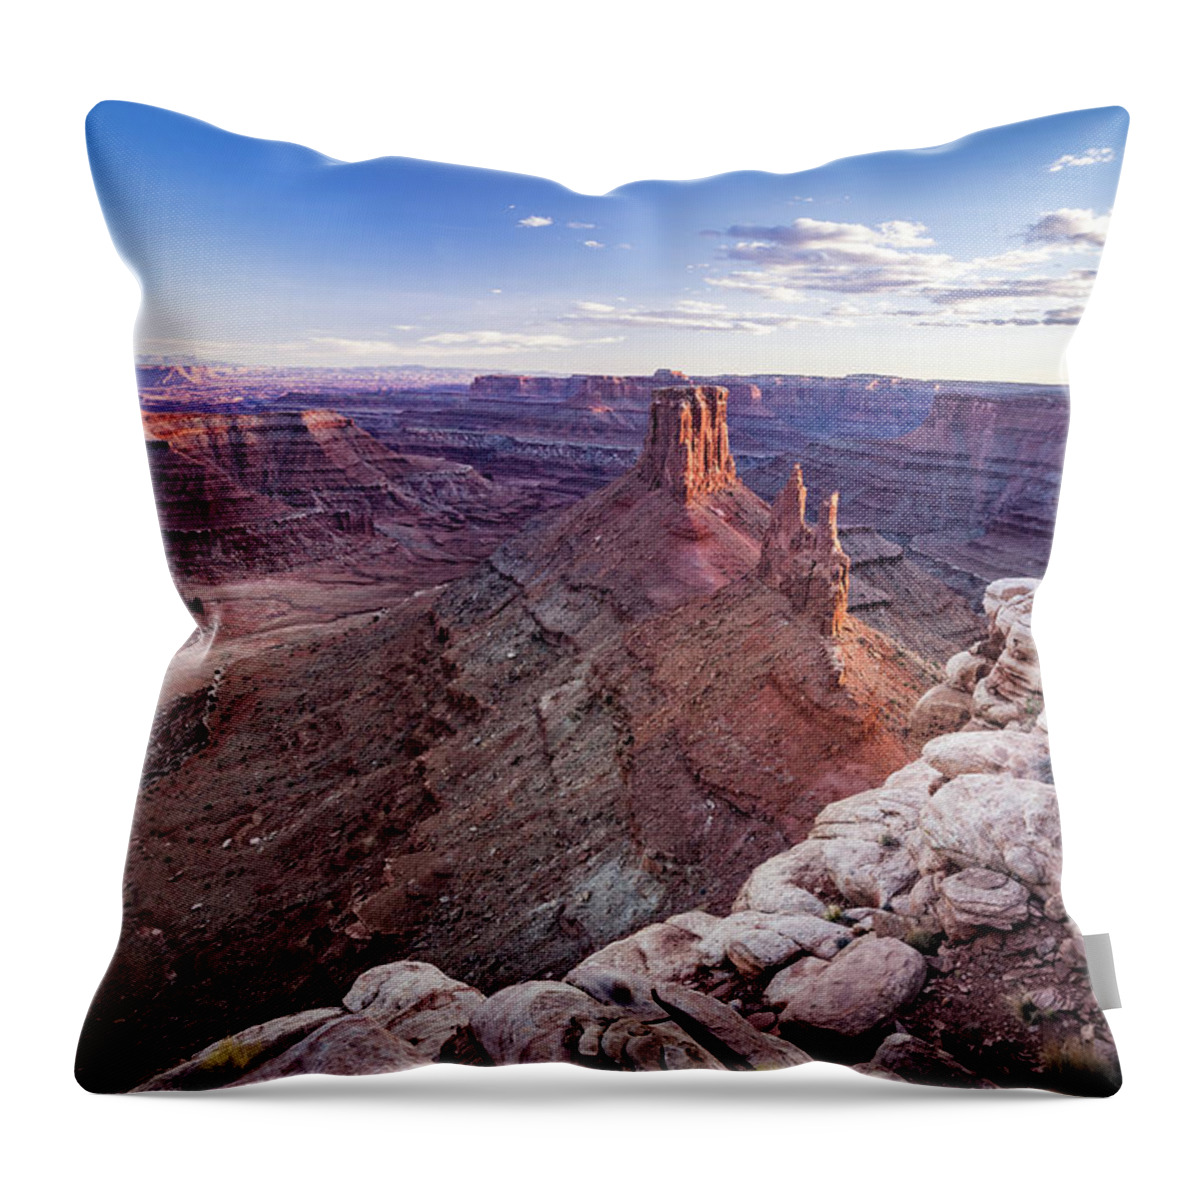 Utah Throw Pillow featuring the photograph Marlboro Point #1 by Mati Krimerman